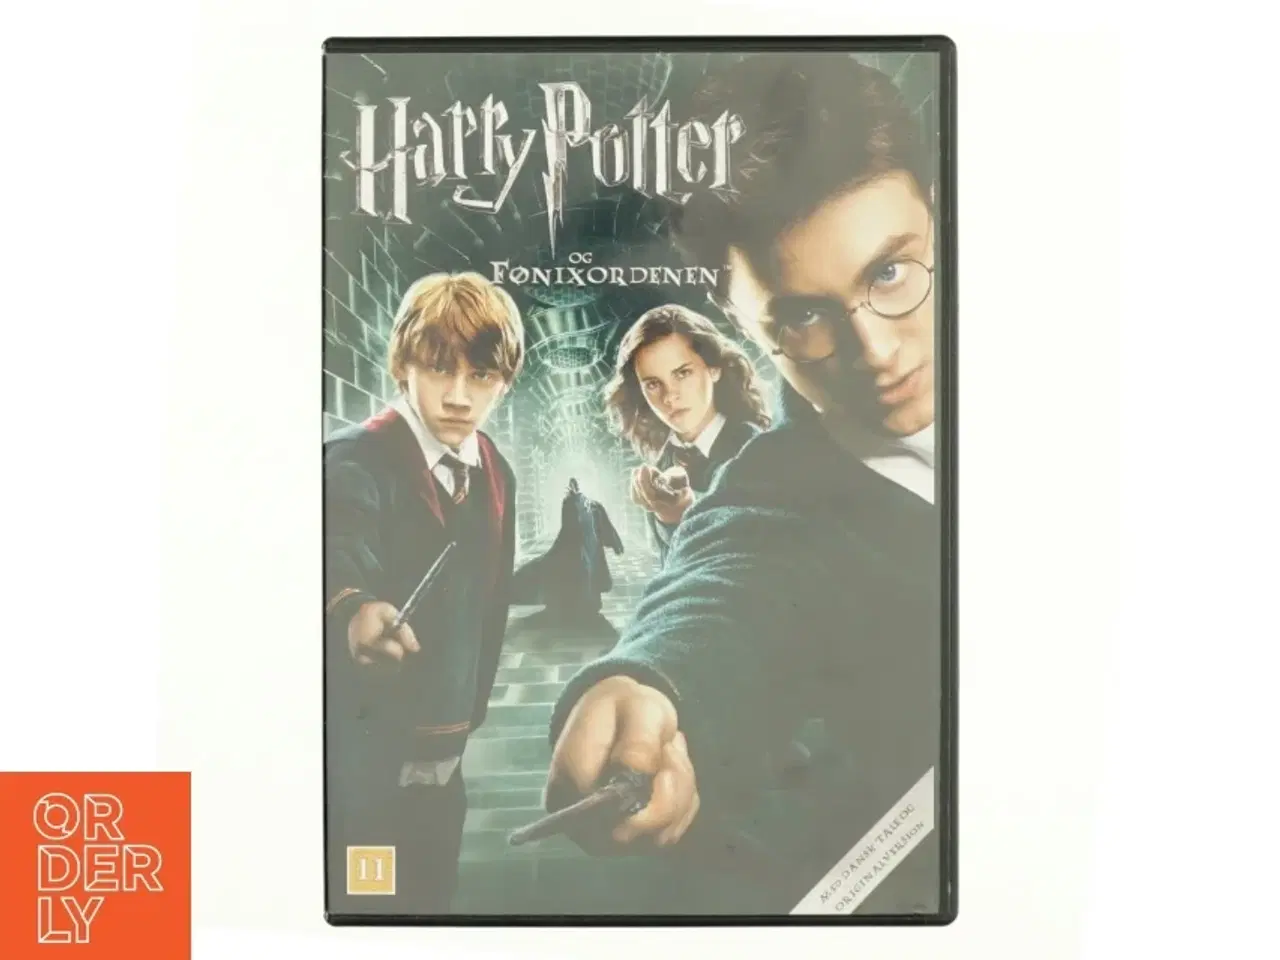 Billede 1 - Fønixordenen (5) Harry Potter